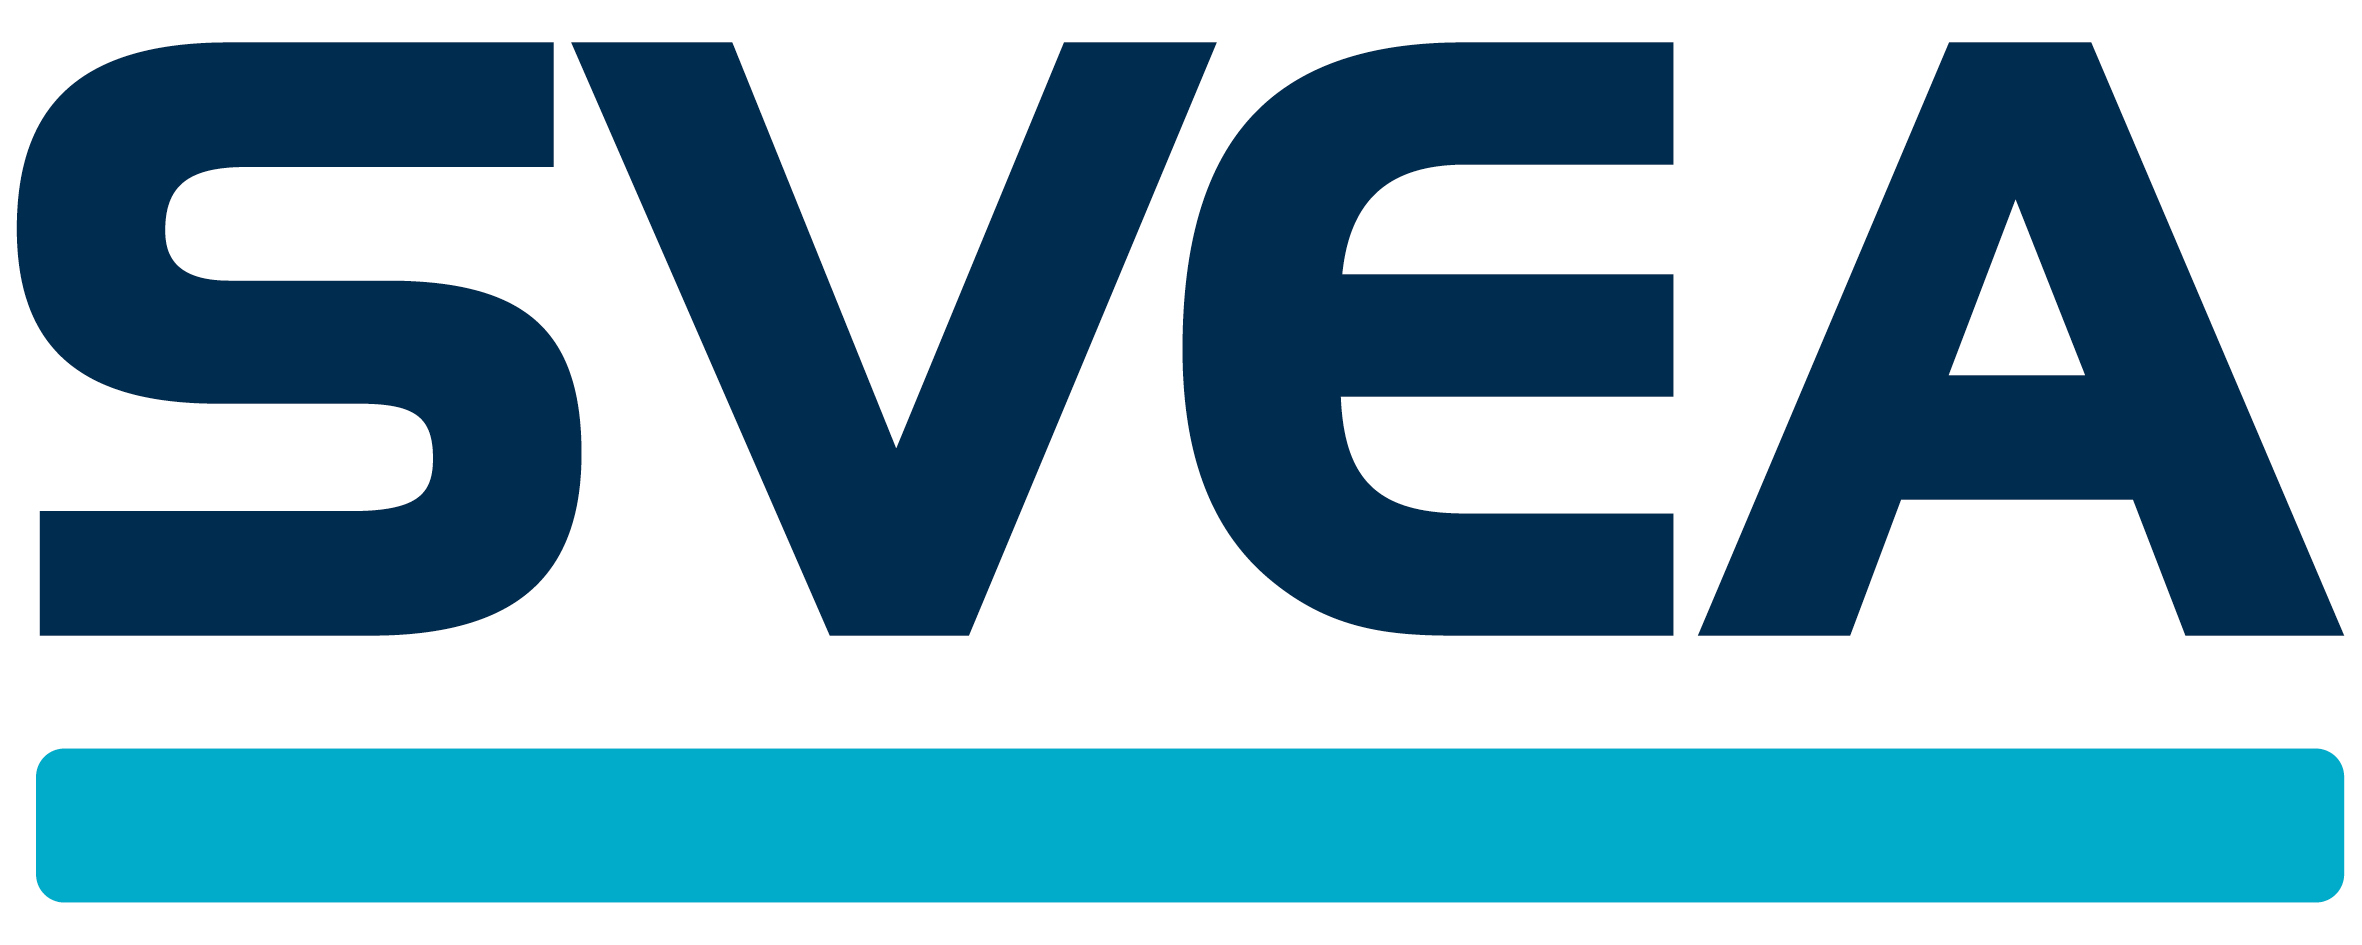 Svea Payments logo